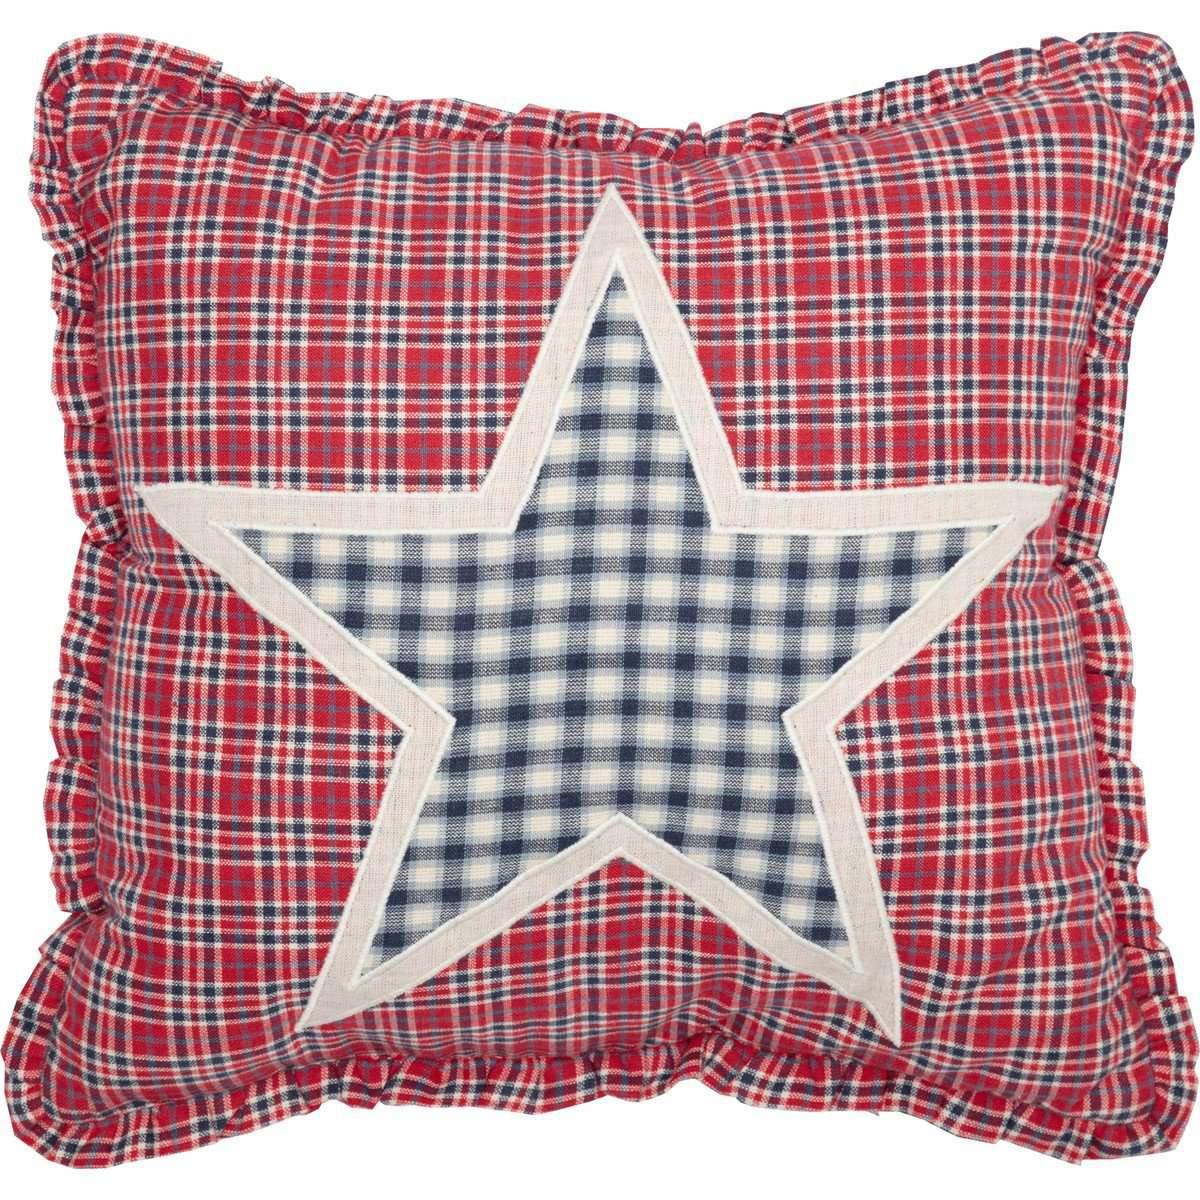 Hatteras Star Pillow 12x12 VHC Brands front